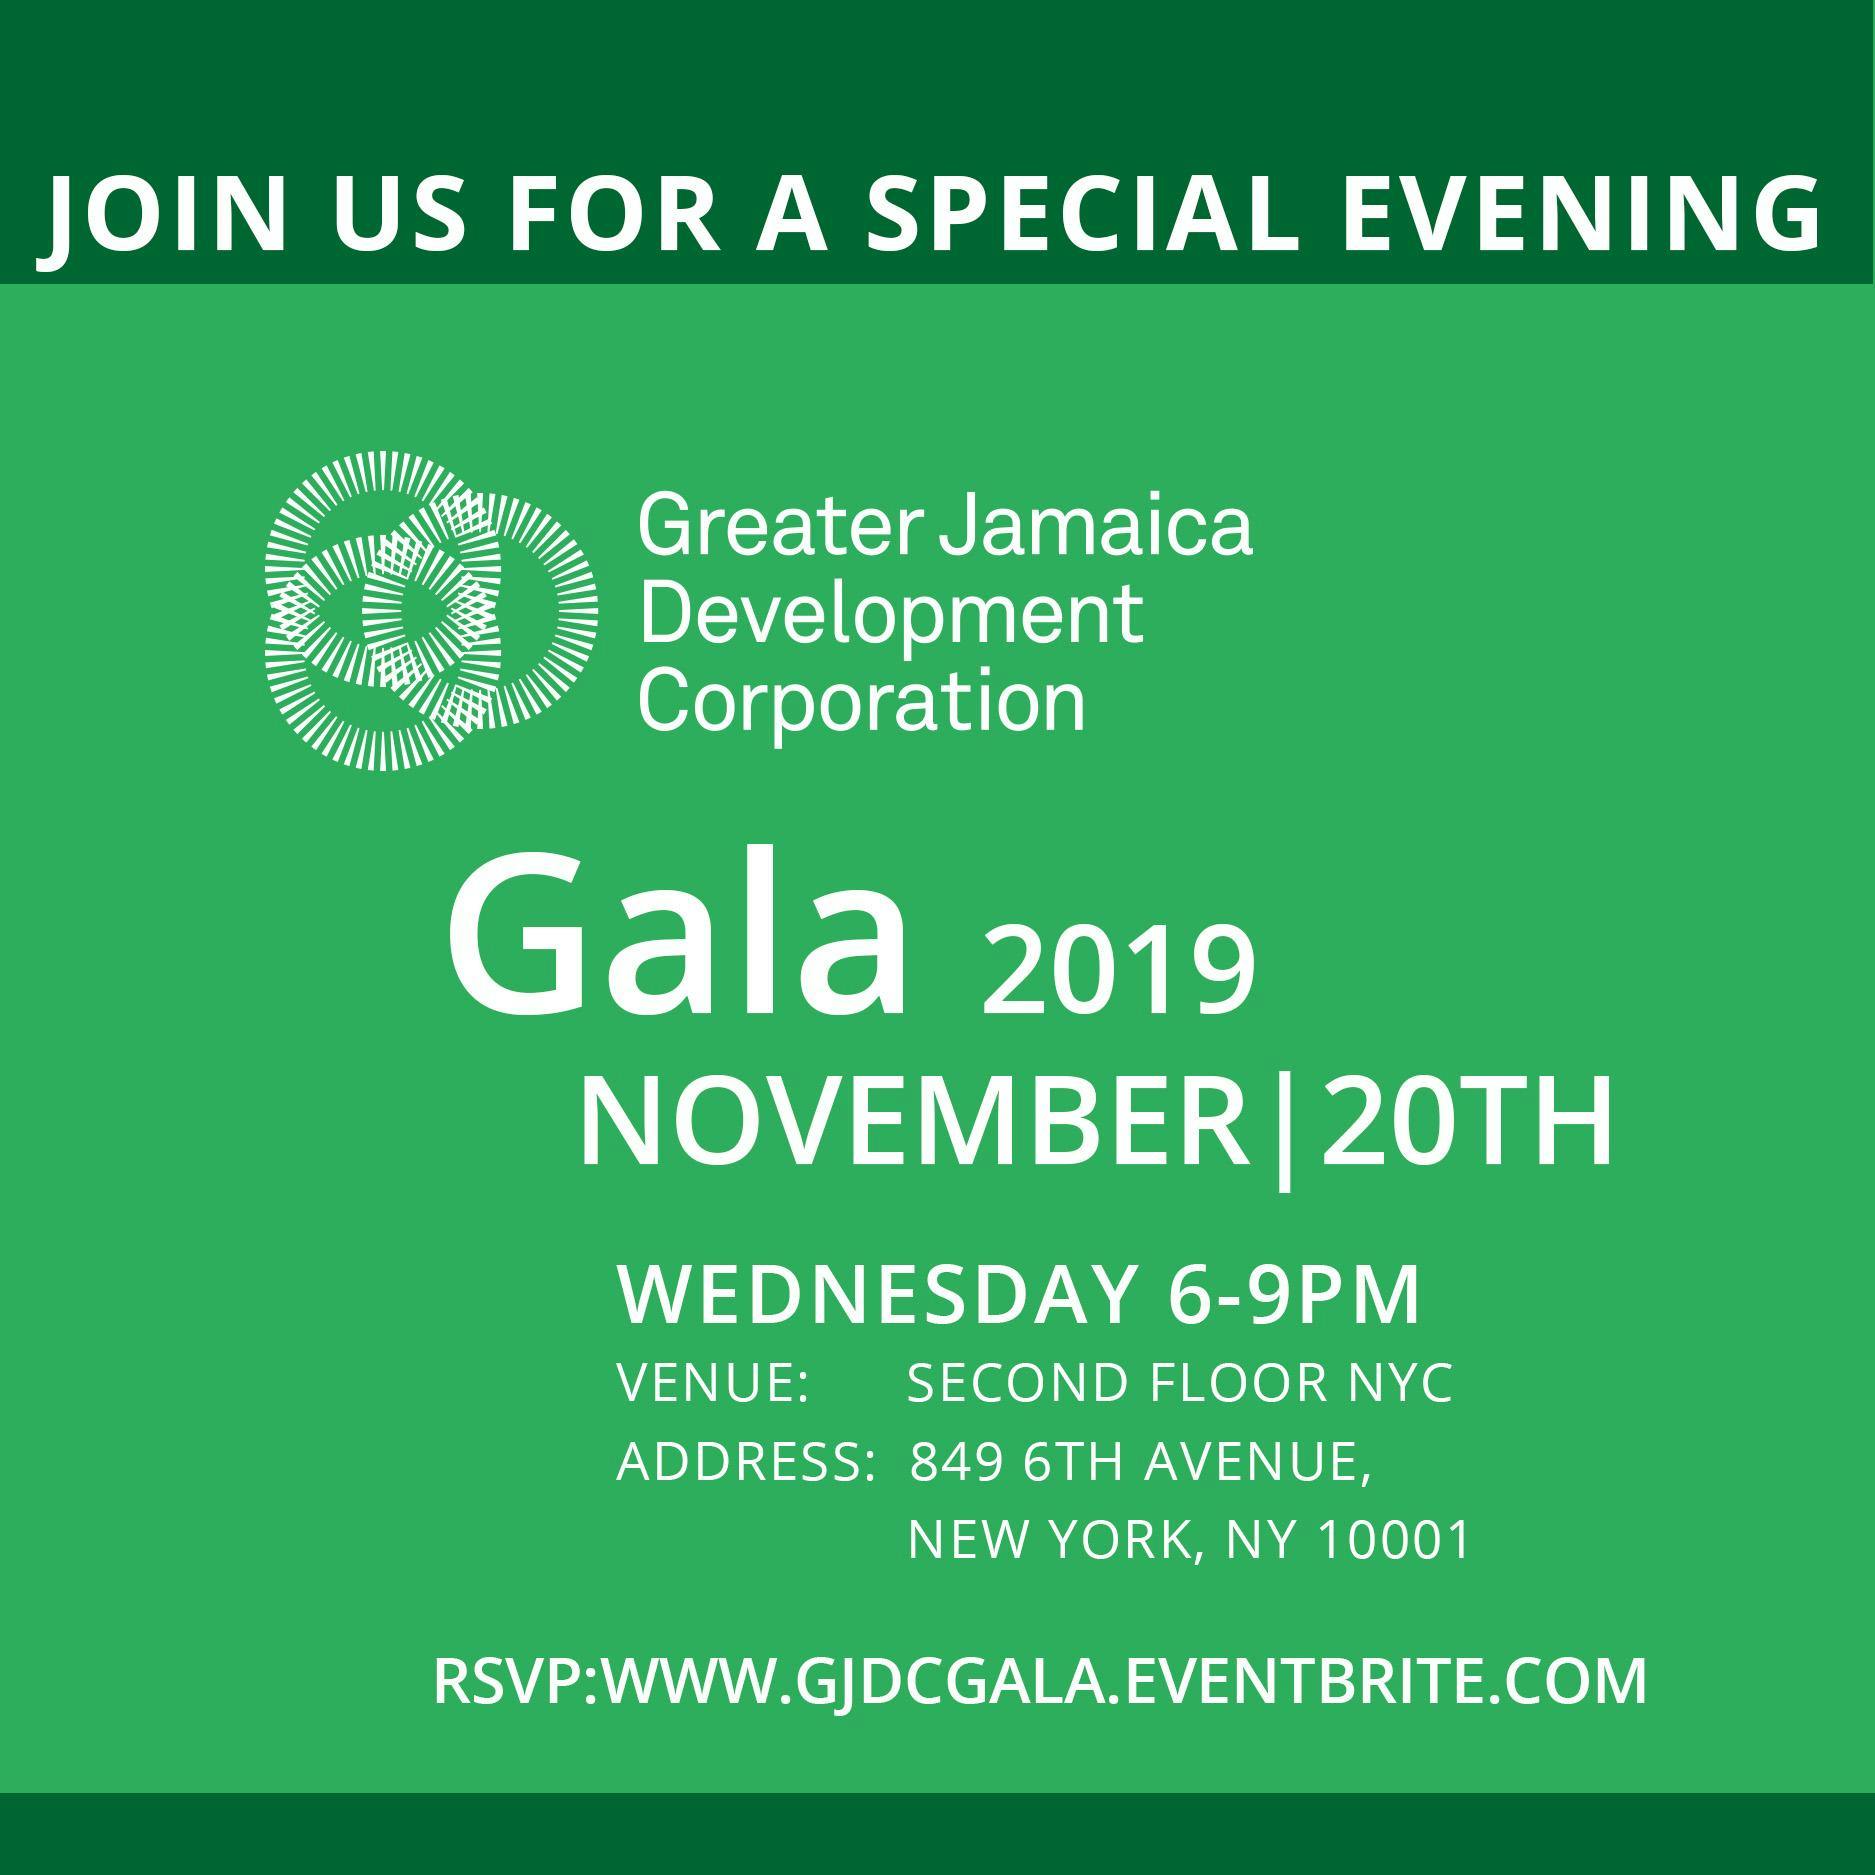 2019 GALA-GREATER JAMAICA DEVELOPMENT CORPORATION